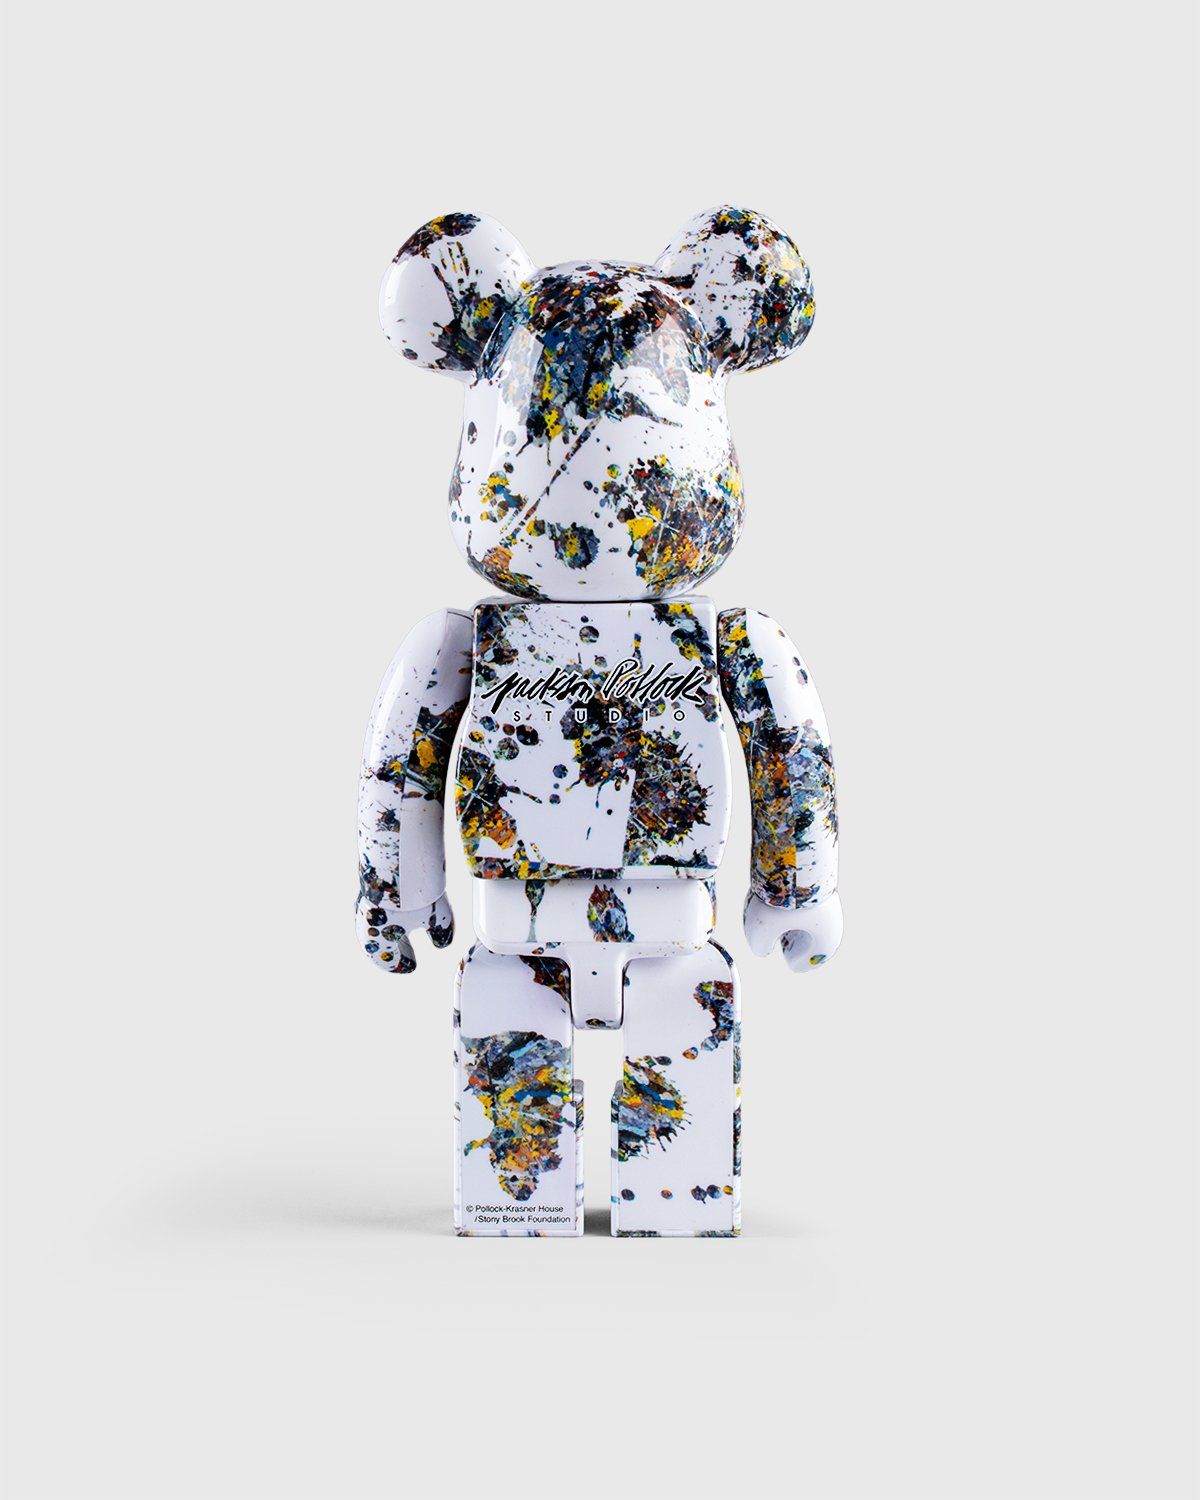 Medicom – Be@rbrick Jackson Pollock Studio Splash 1000% - Arts & Collectibles - Multi - Image 1